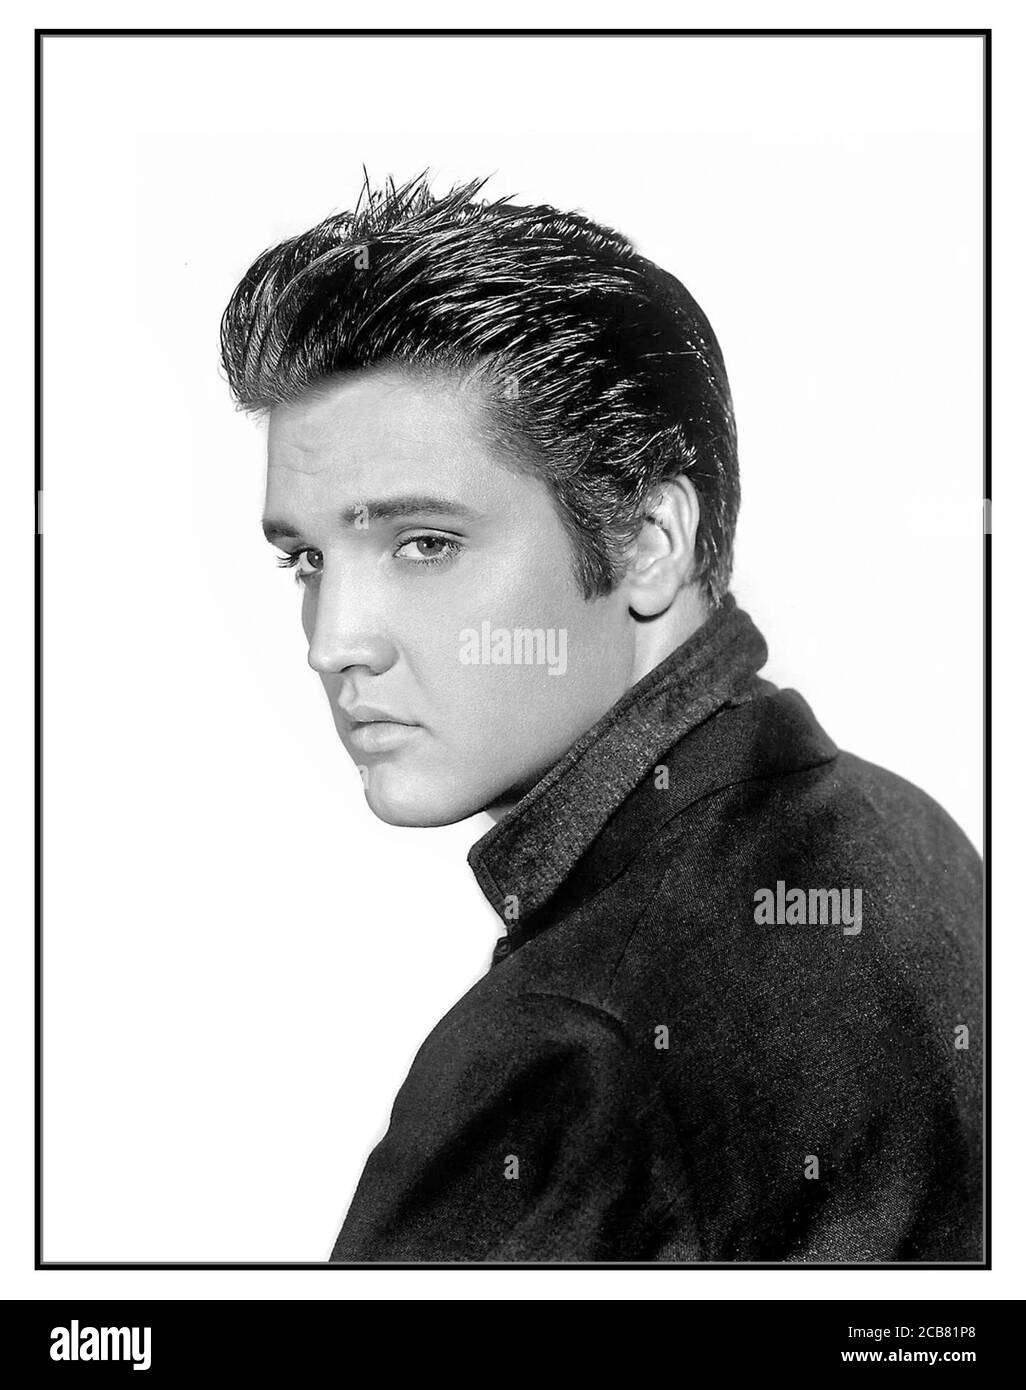 ELVIS PRESLEY '50's Vintage 1950's Hollywood film studio press promotional portrait still of Elvis Presley Stock Photo